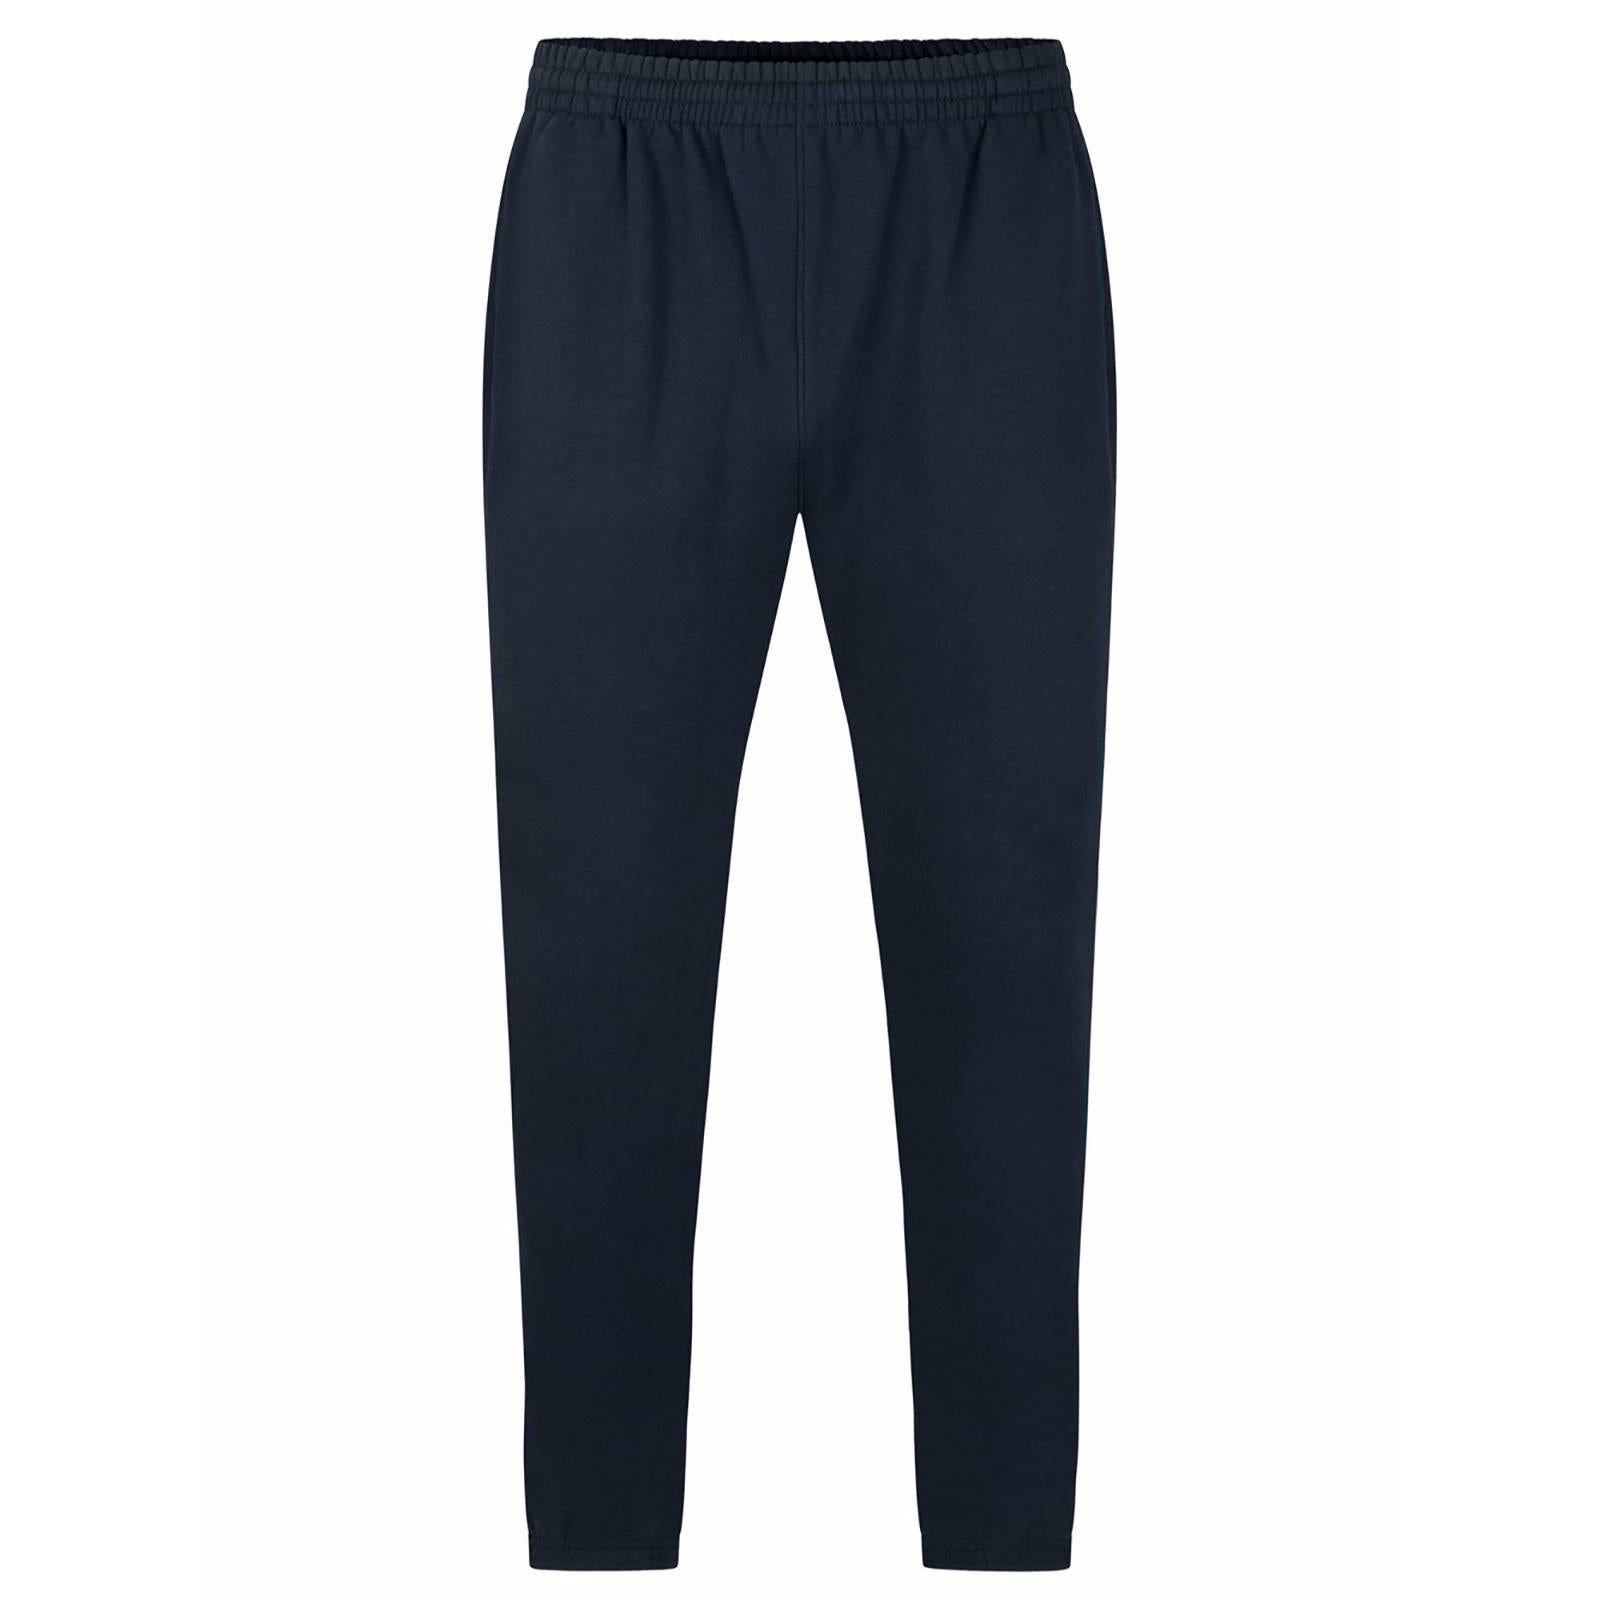 UX jogging pants Navy